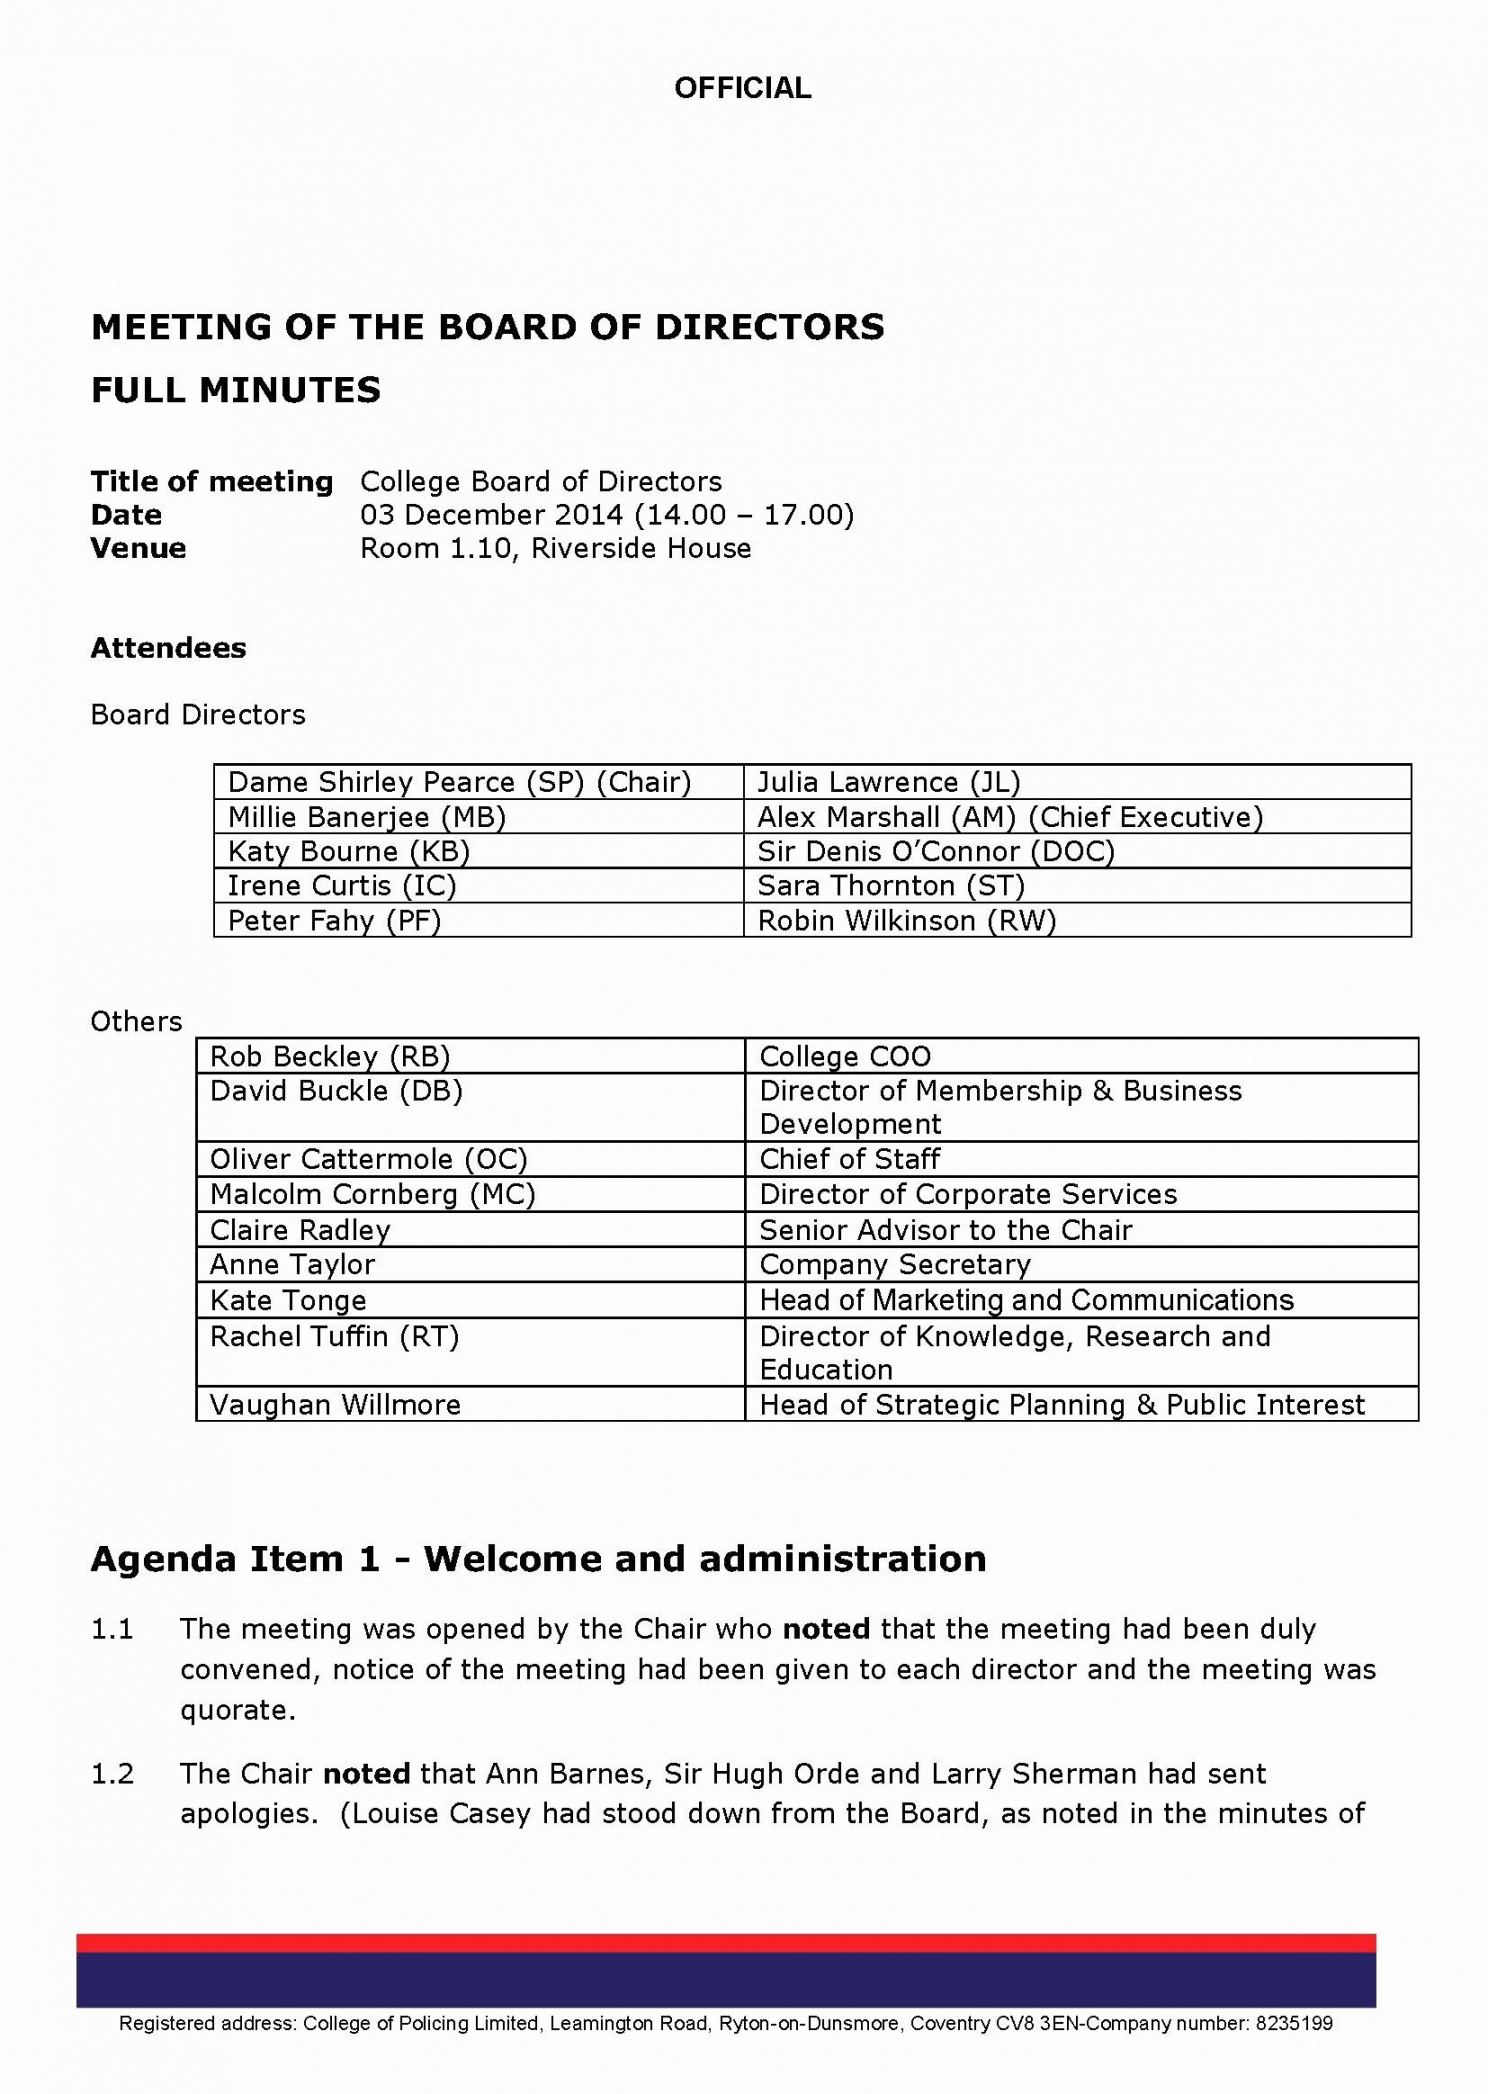 free corporate board of directors meeting agenda template in 2020 board of directors agenda template excel